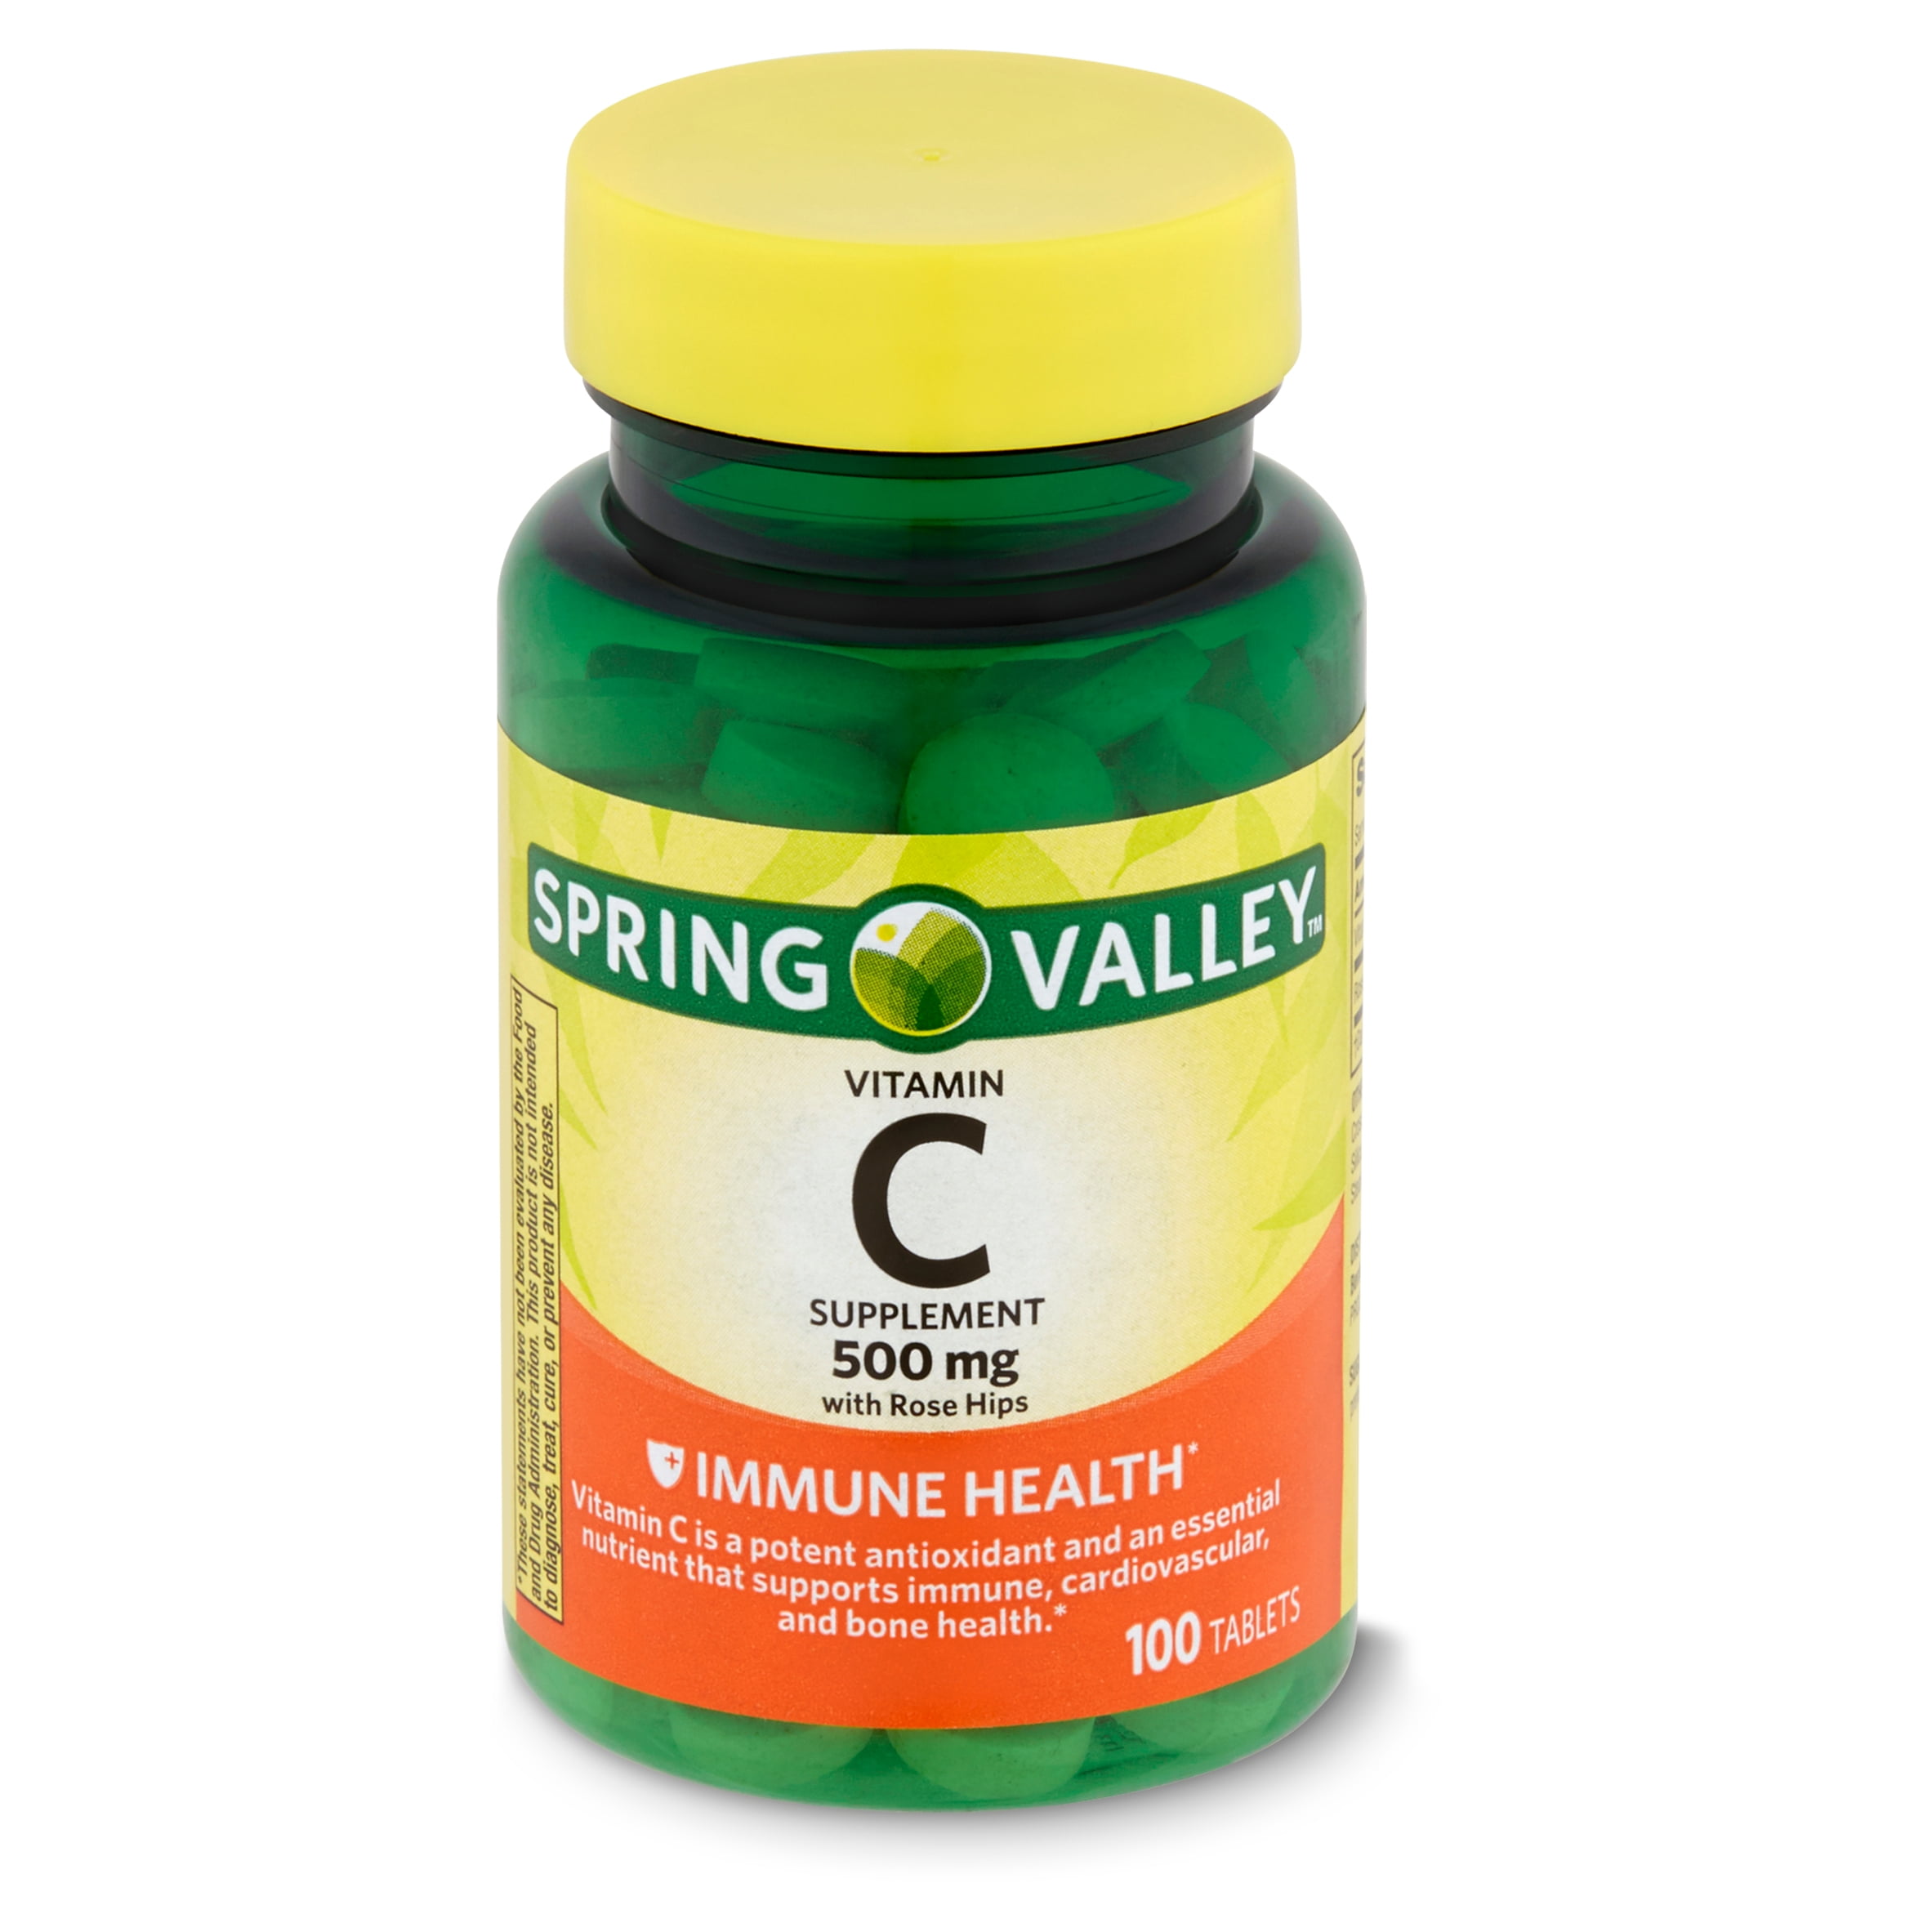 Fahrenheit dubbel Regeneratie Spring Valley Vitamin C with Rose Hips Supplement, 500 mg, 100 count -  Walmart.com